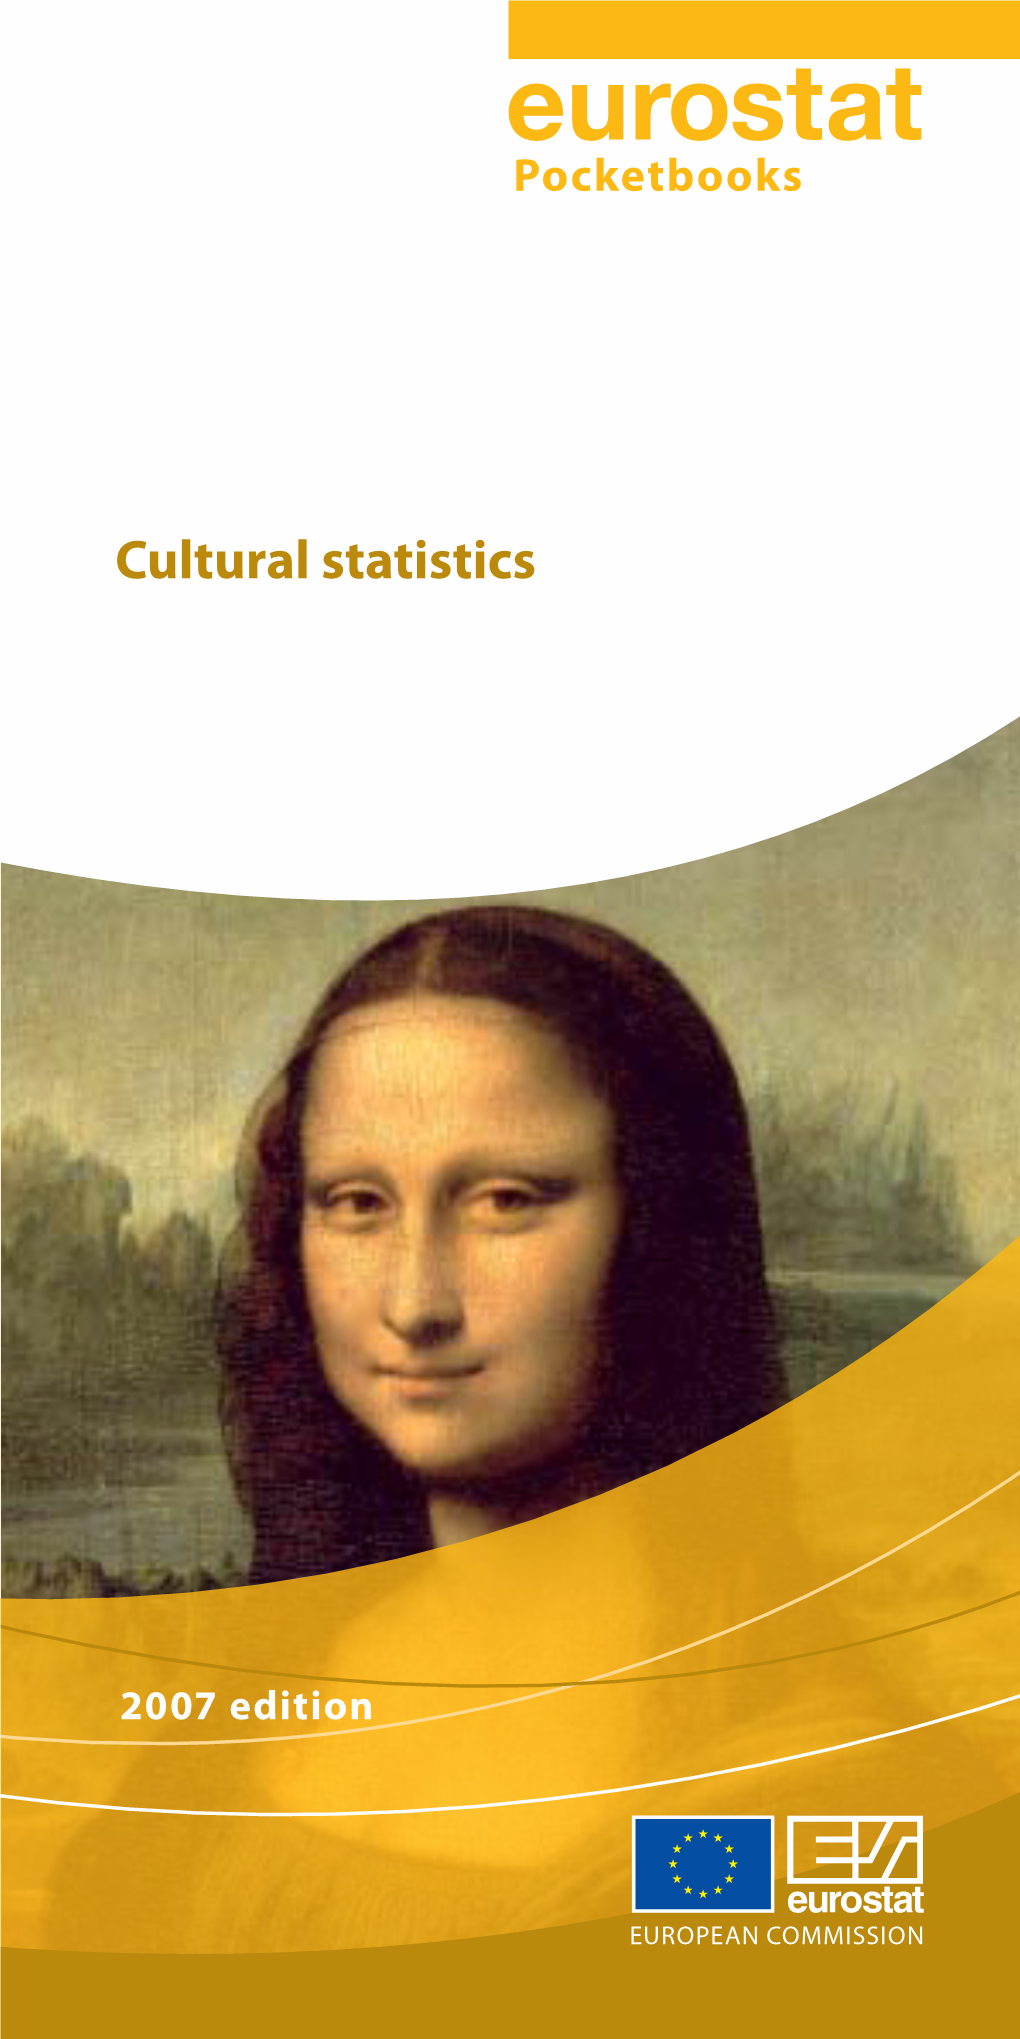 Cultural Statistics Comparable at European Level